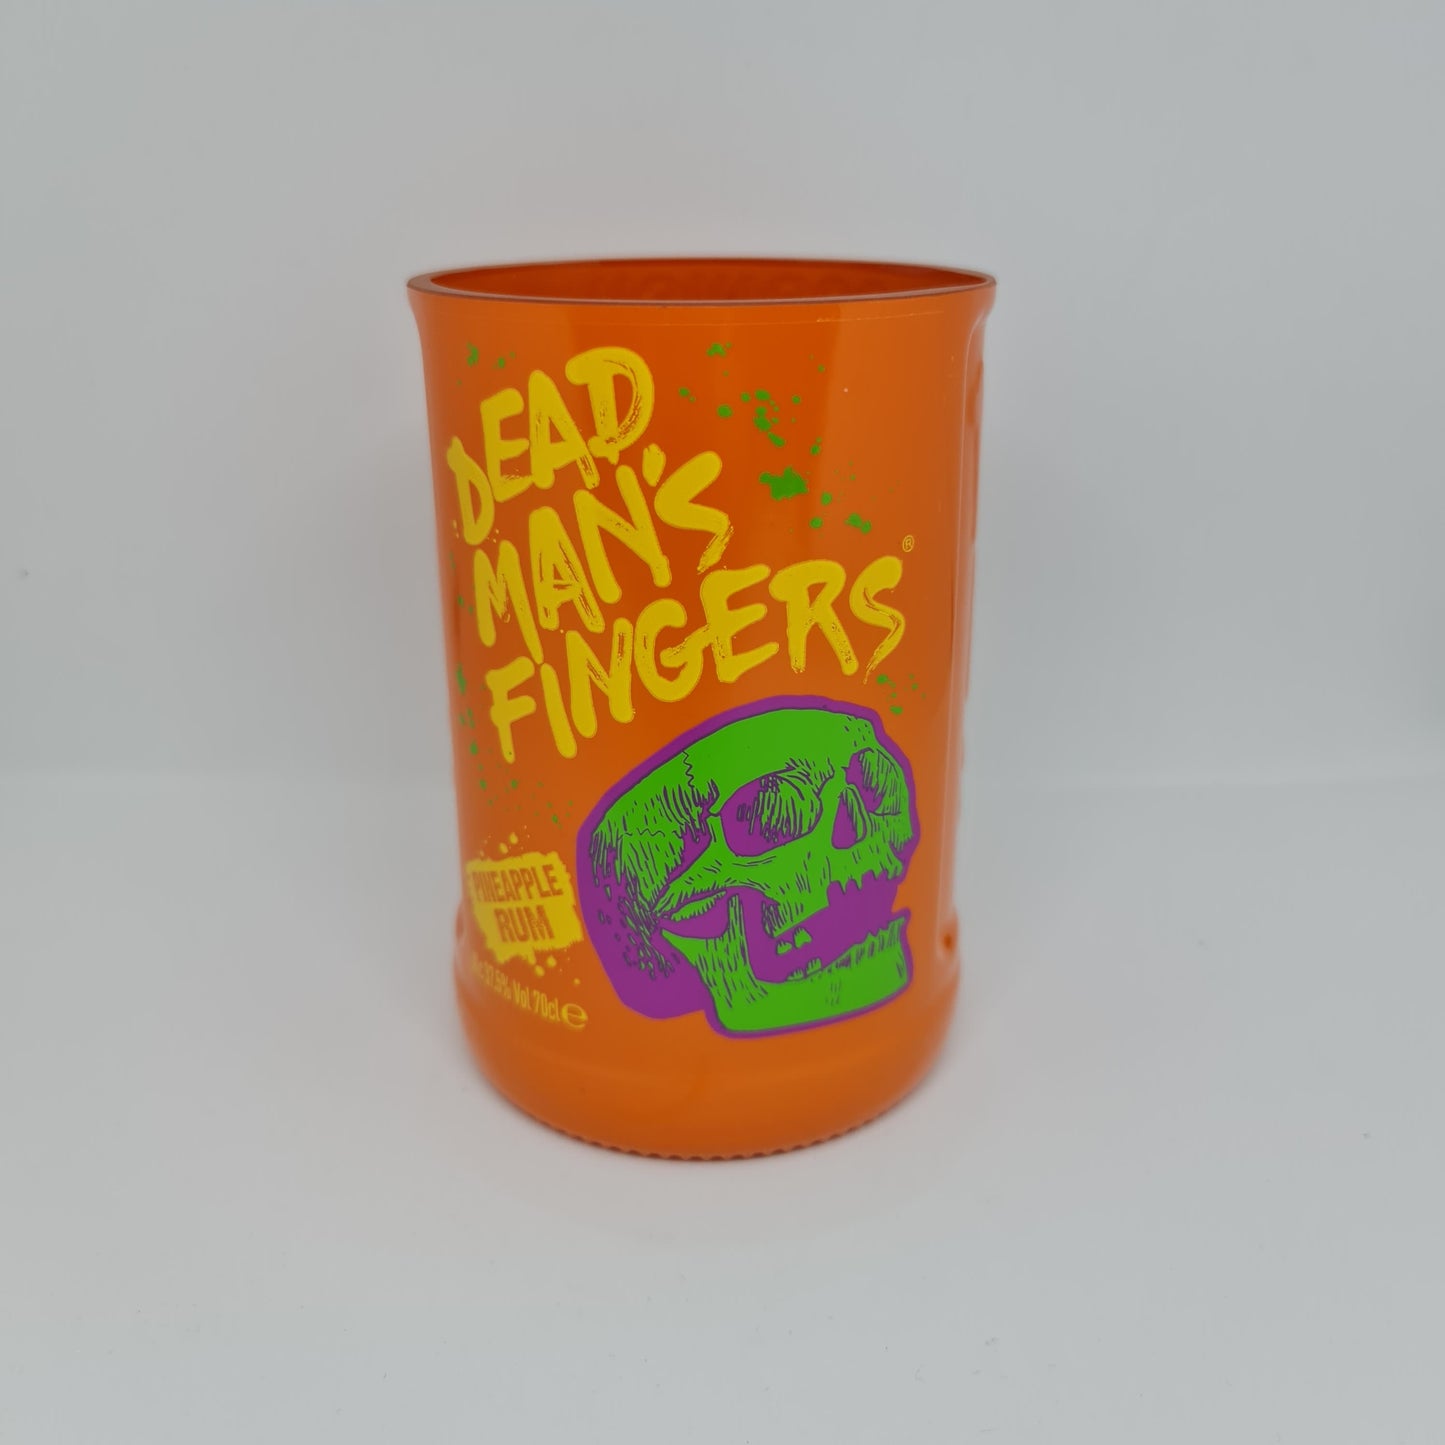 Dead Man's Fingers Pineapple Rum Bottle Candle